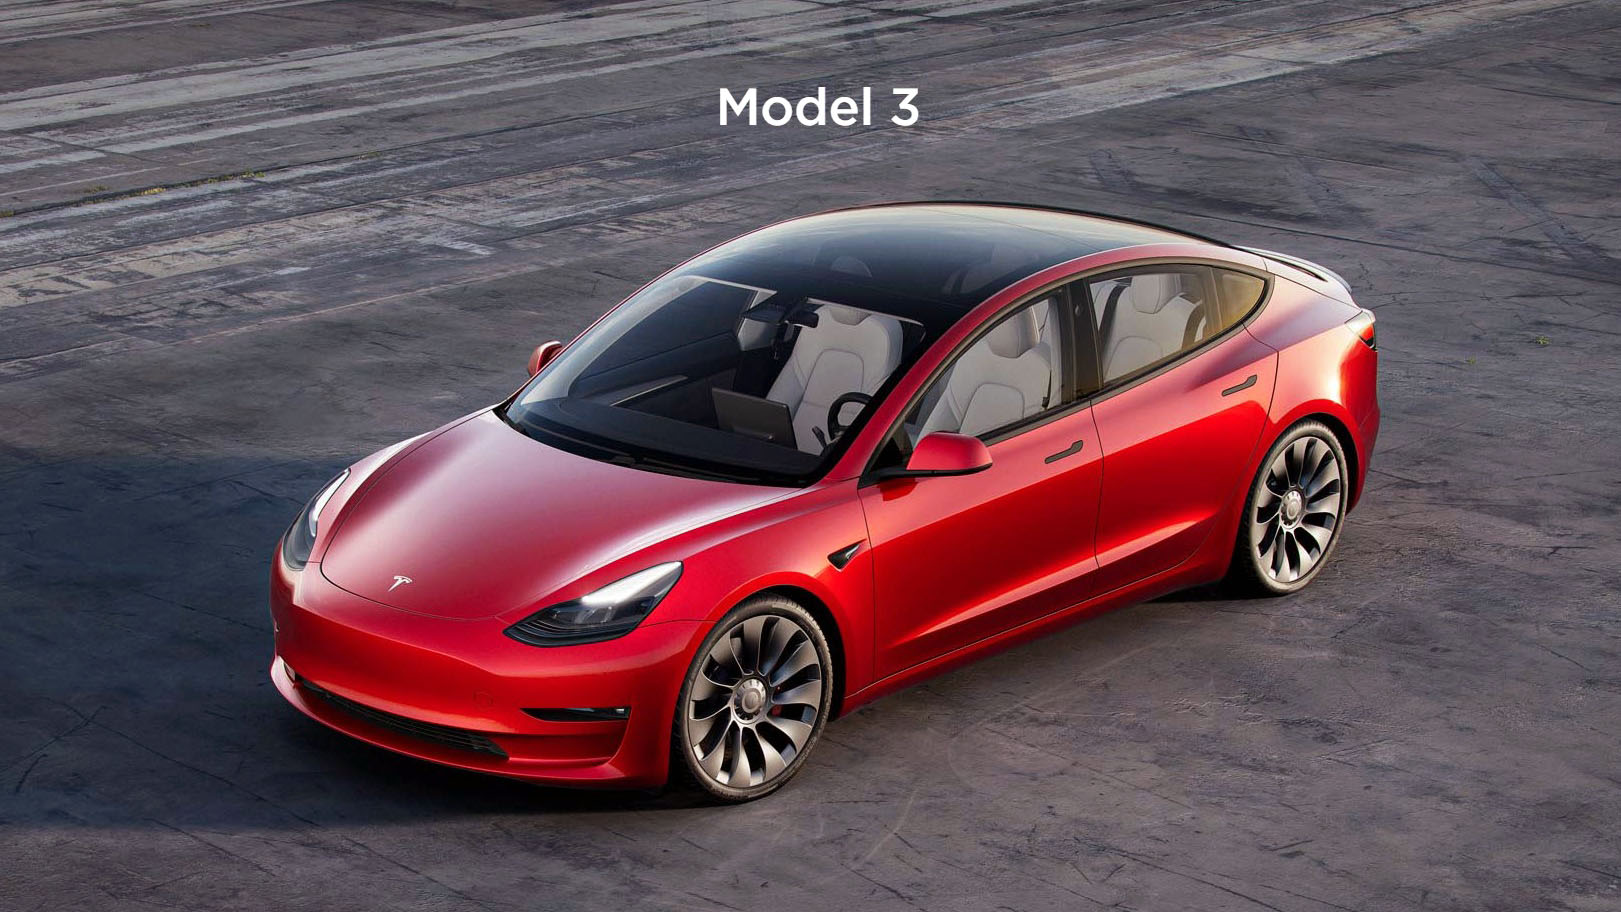 The newly designed car Tesla Model 3 with a sleek black exterior design